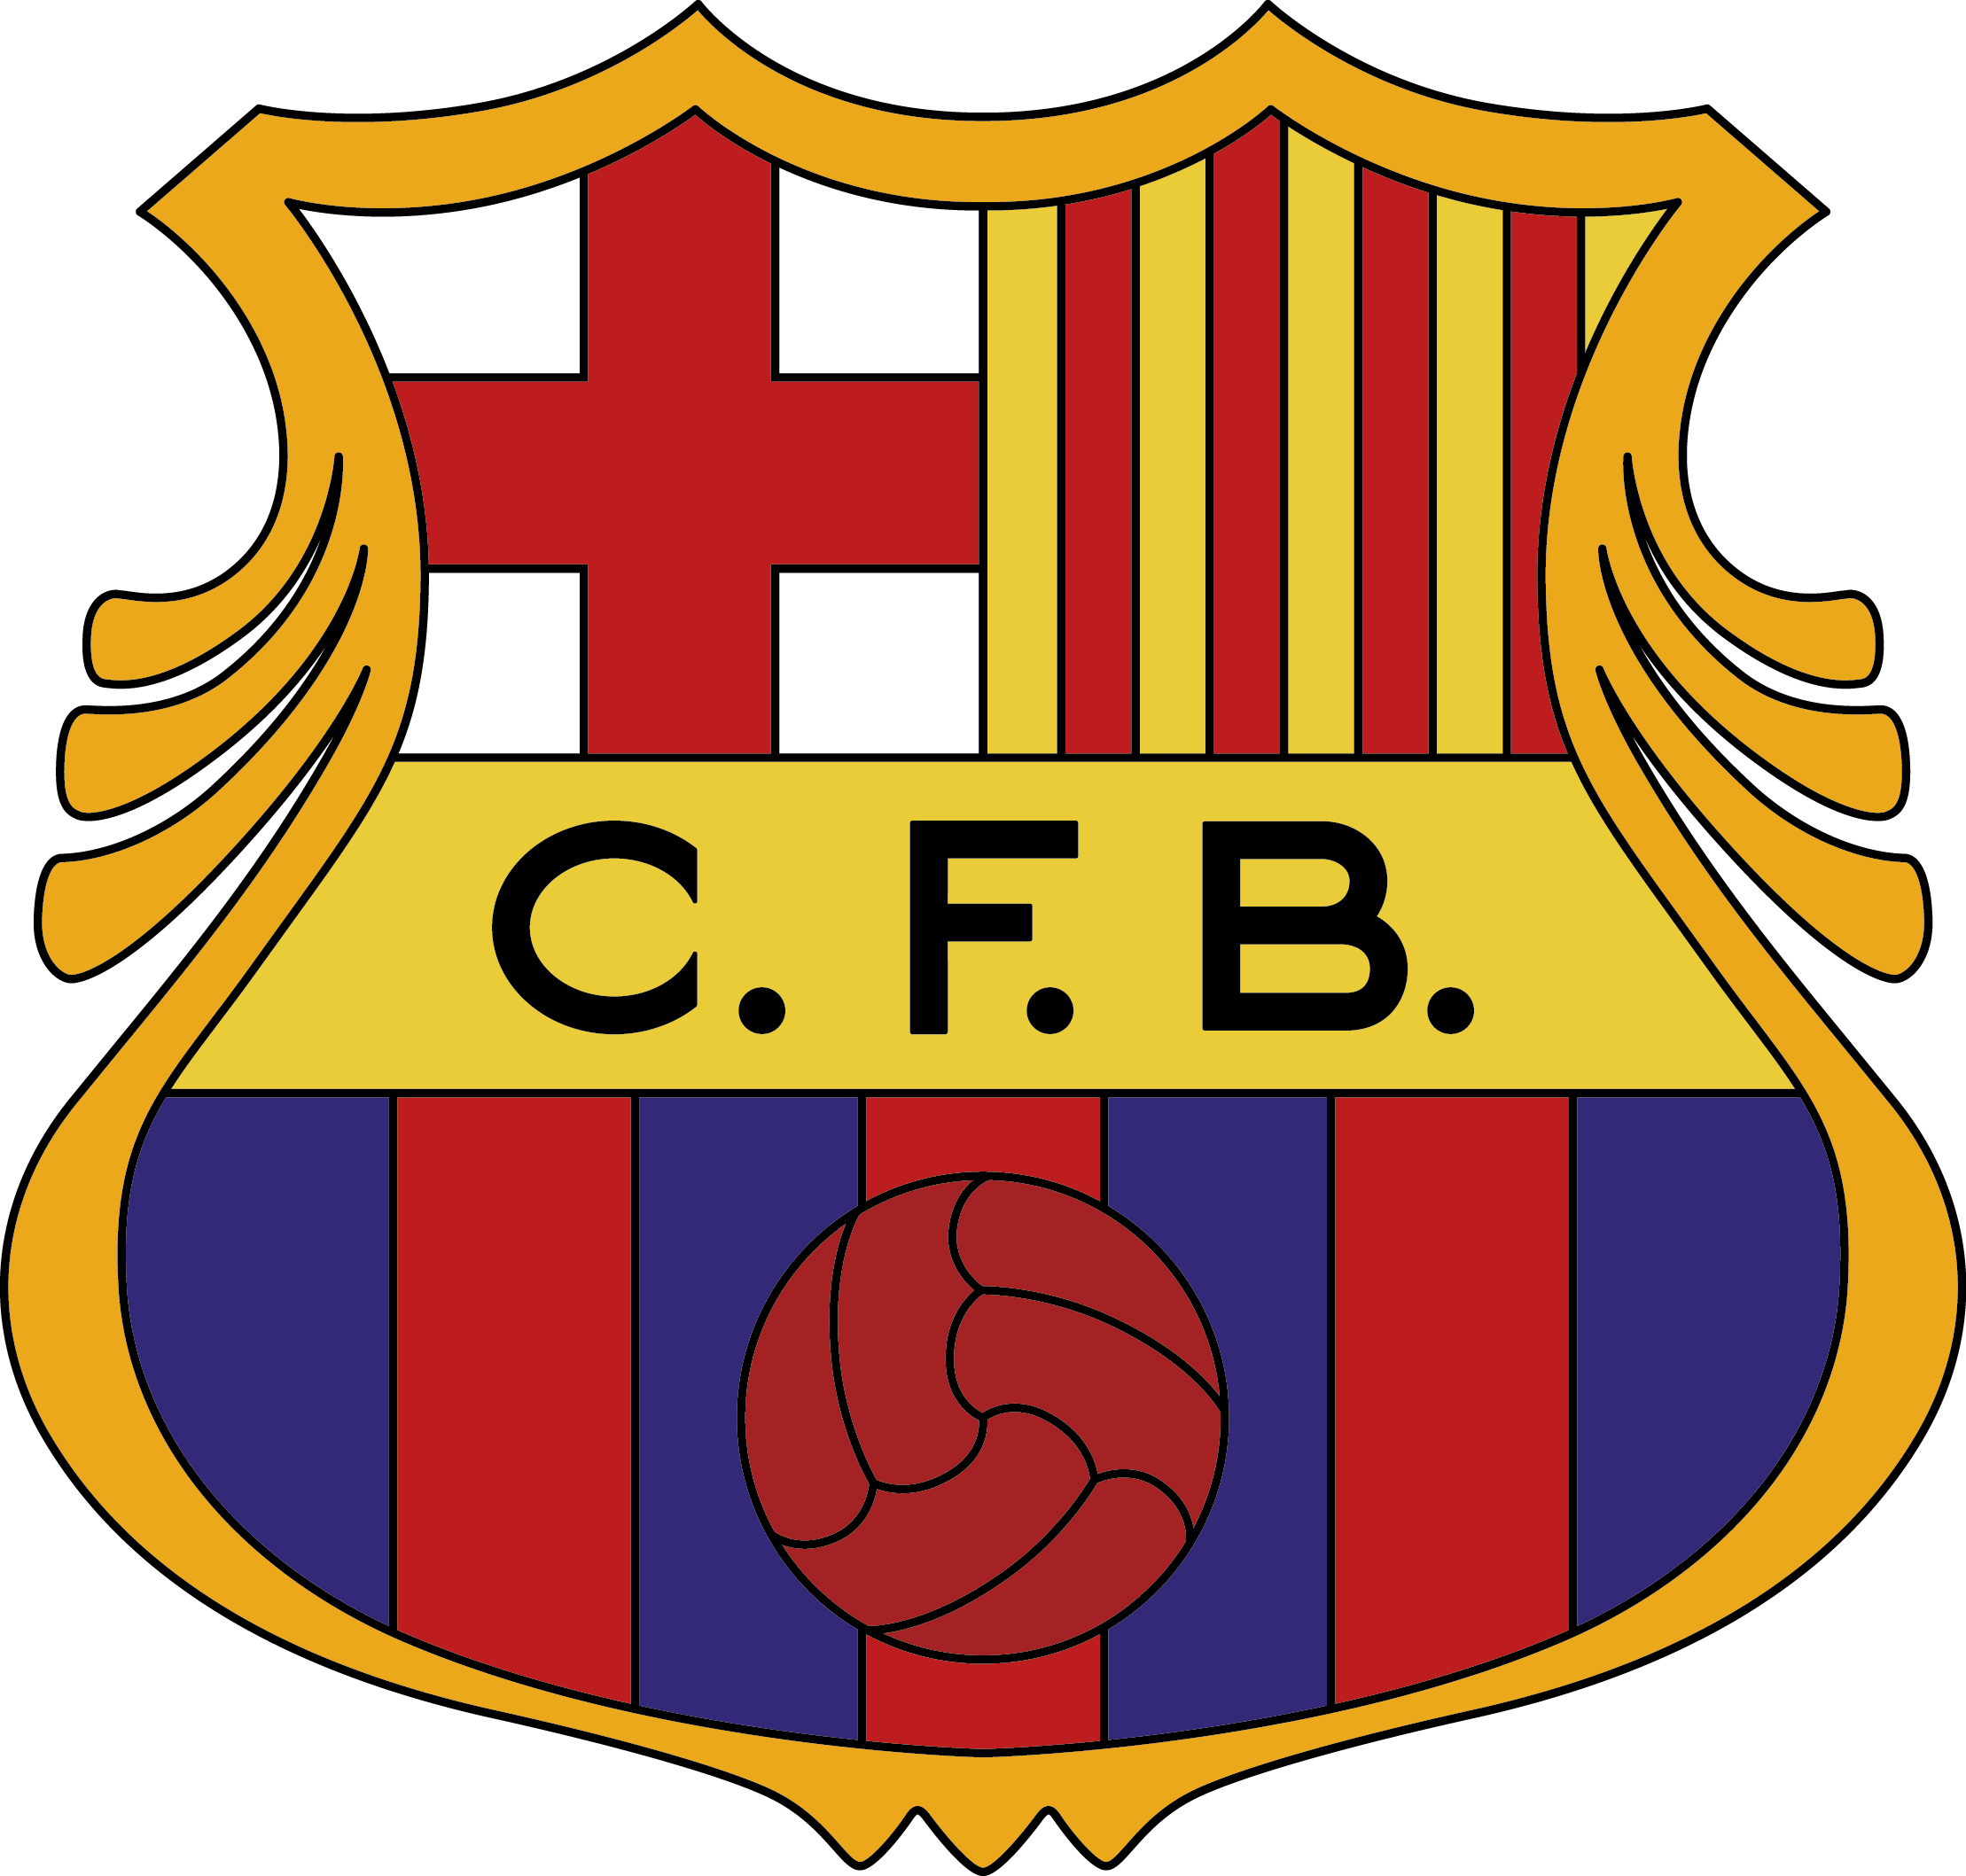 Football Logos - Fc Barcelona (2218x2117)